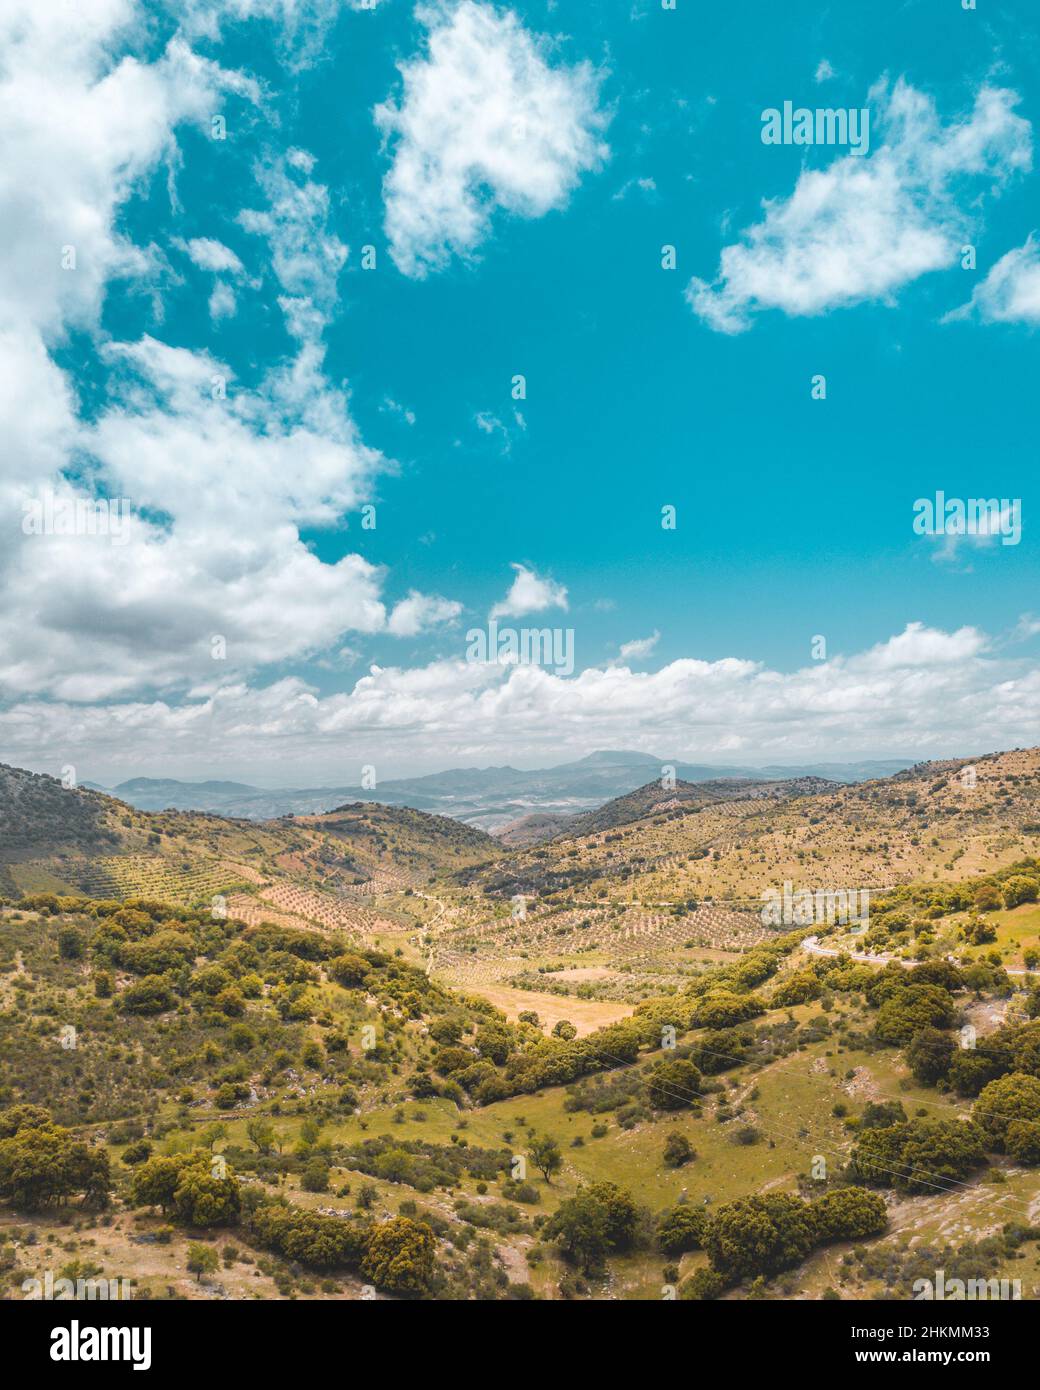 Spanish Landscape taken by drone Stock Photo